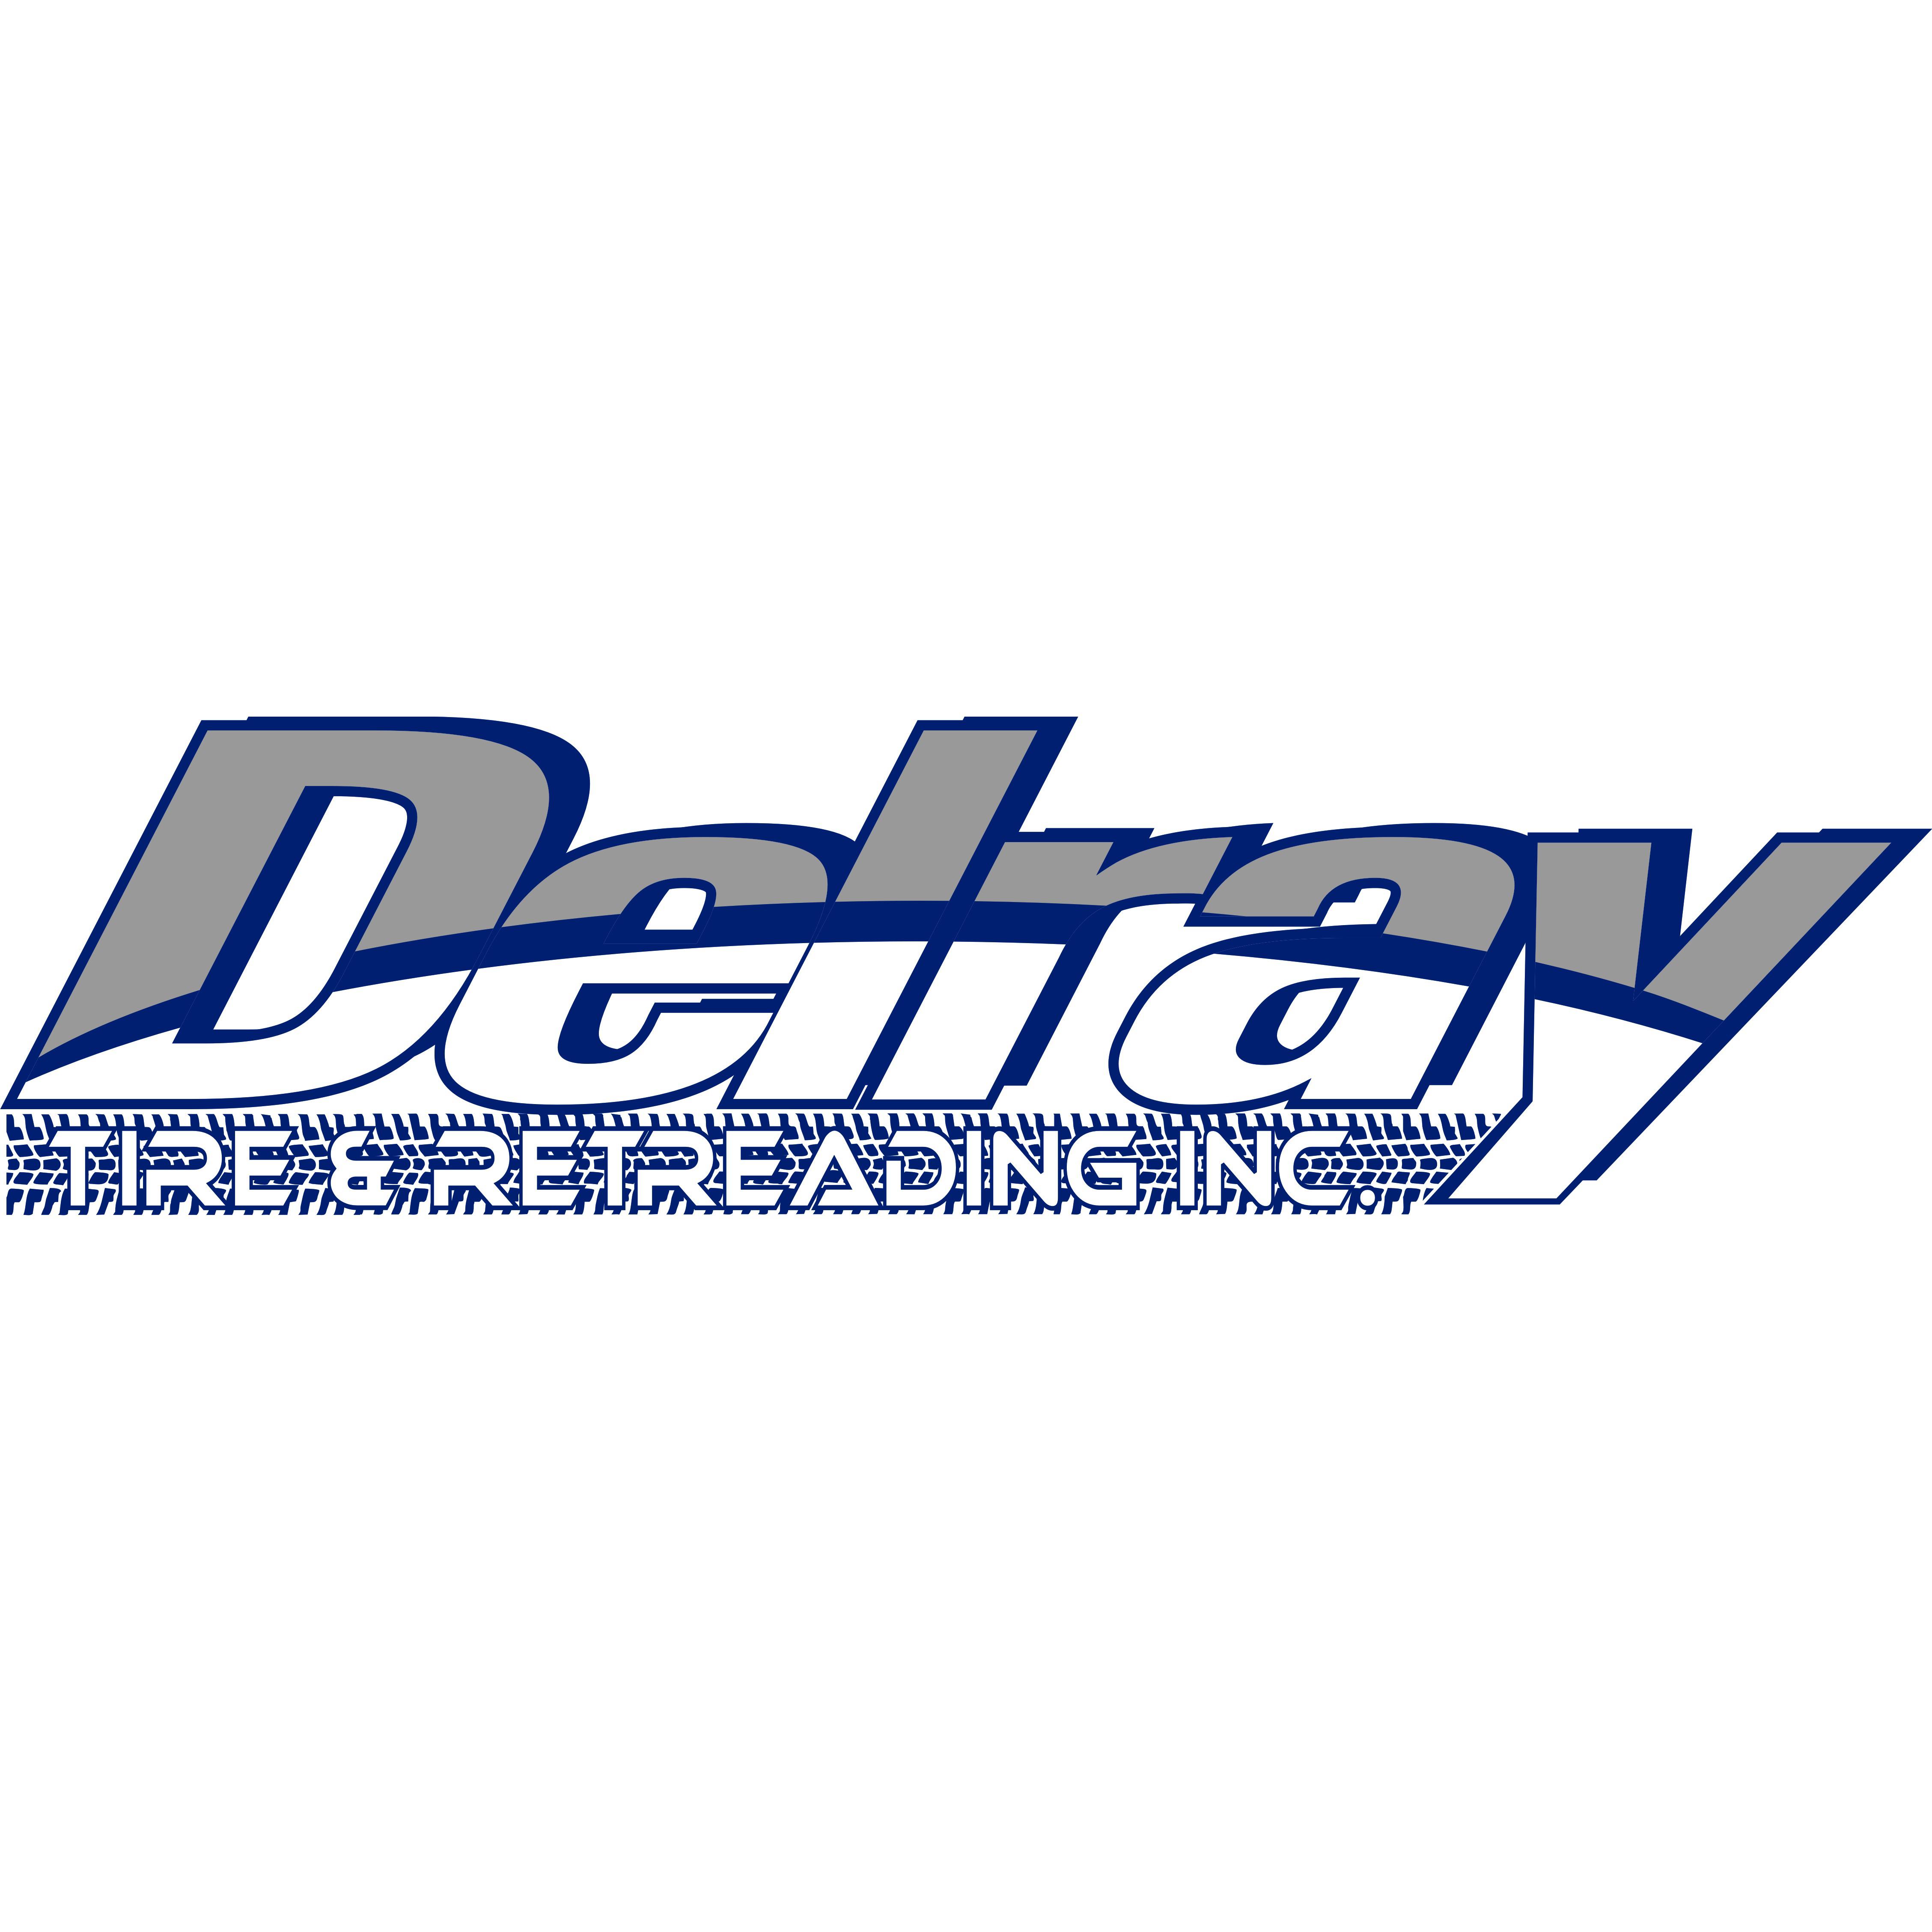 Delray Tire & Retreading Inc.